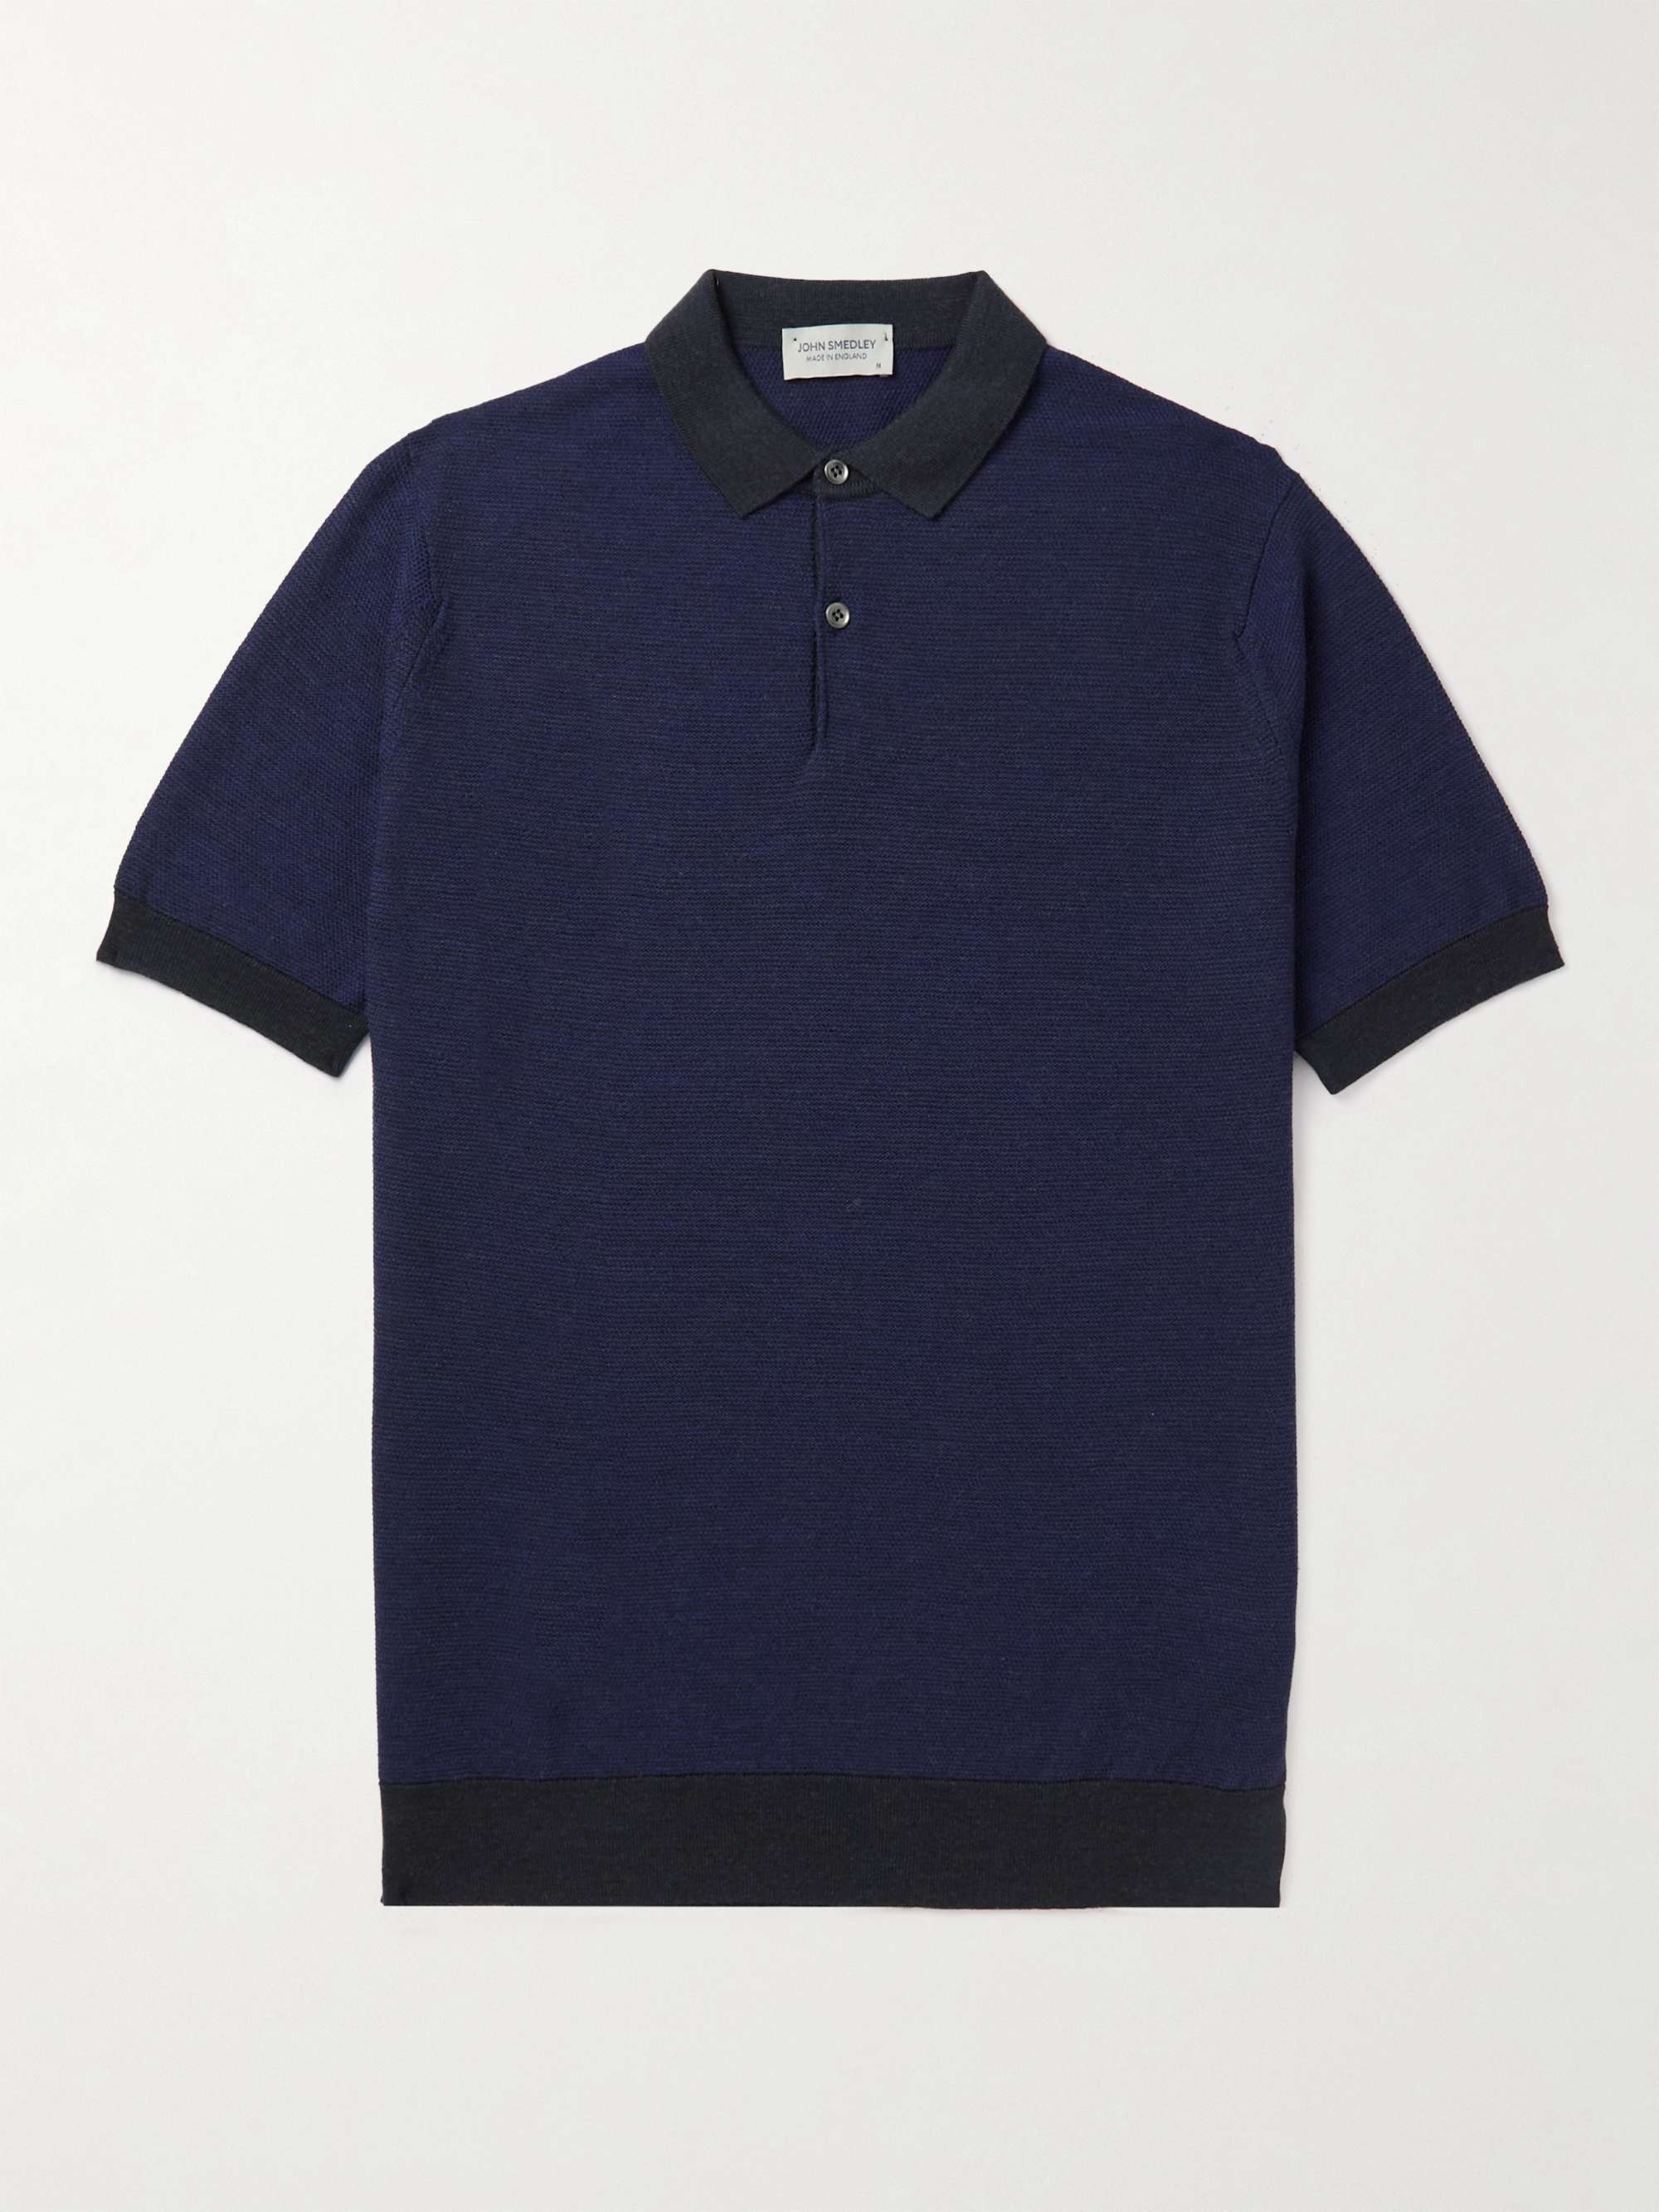 JOHN SMEDLEY Slim-Fit Wool Polo Shirt